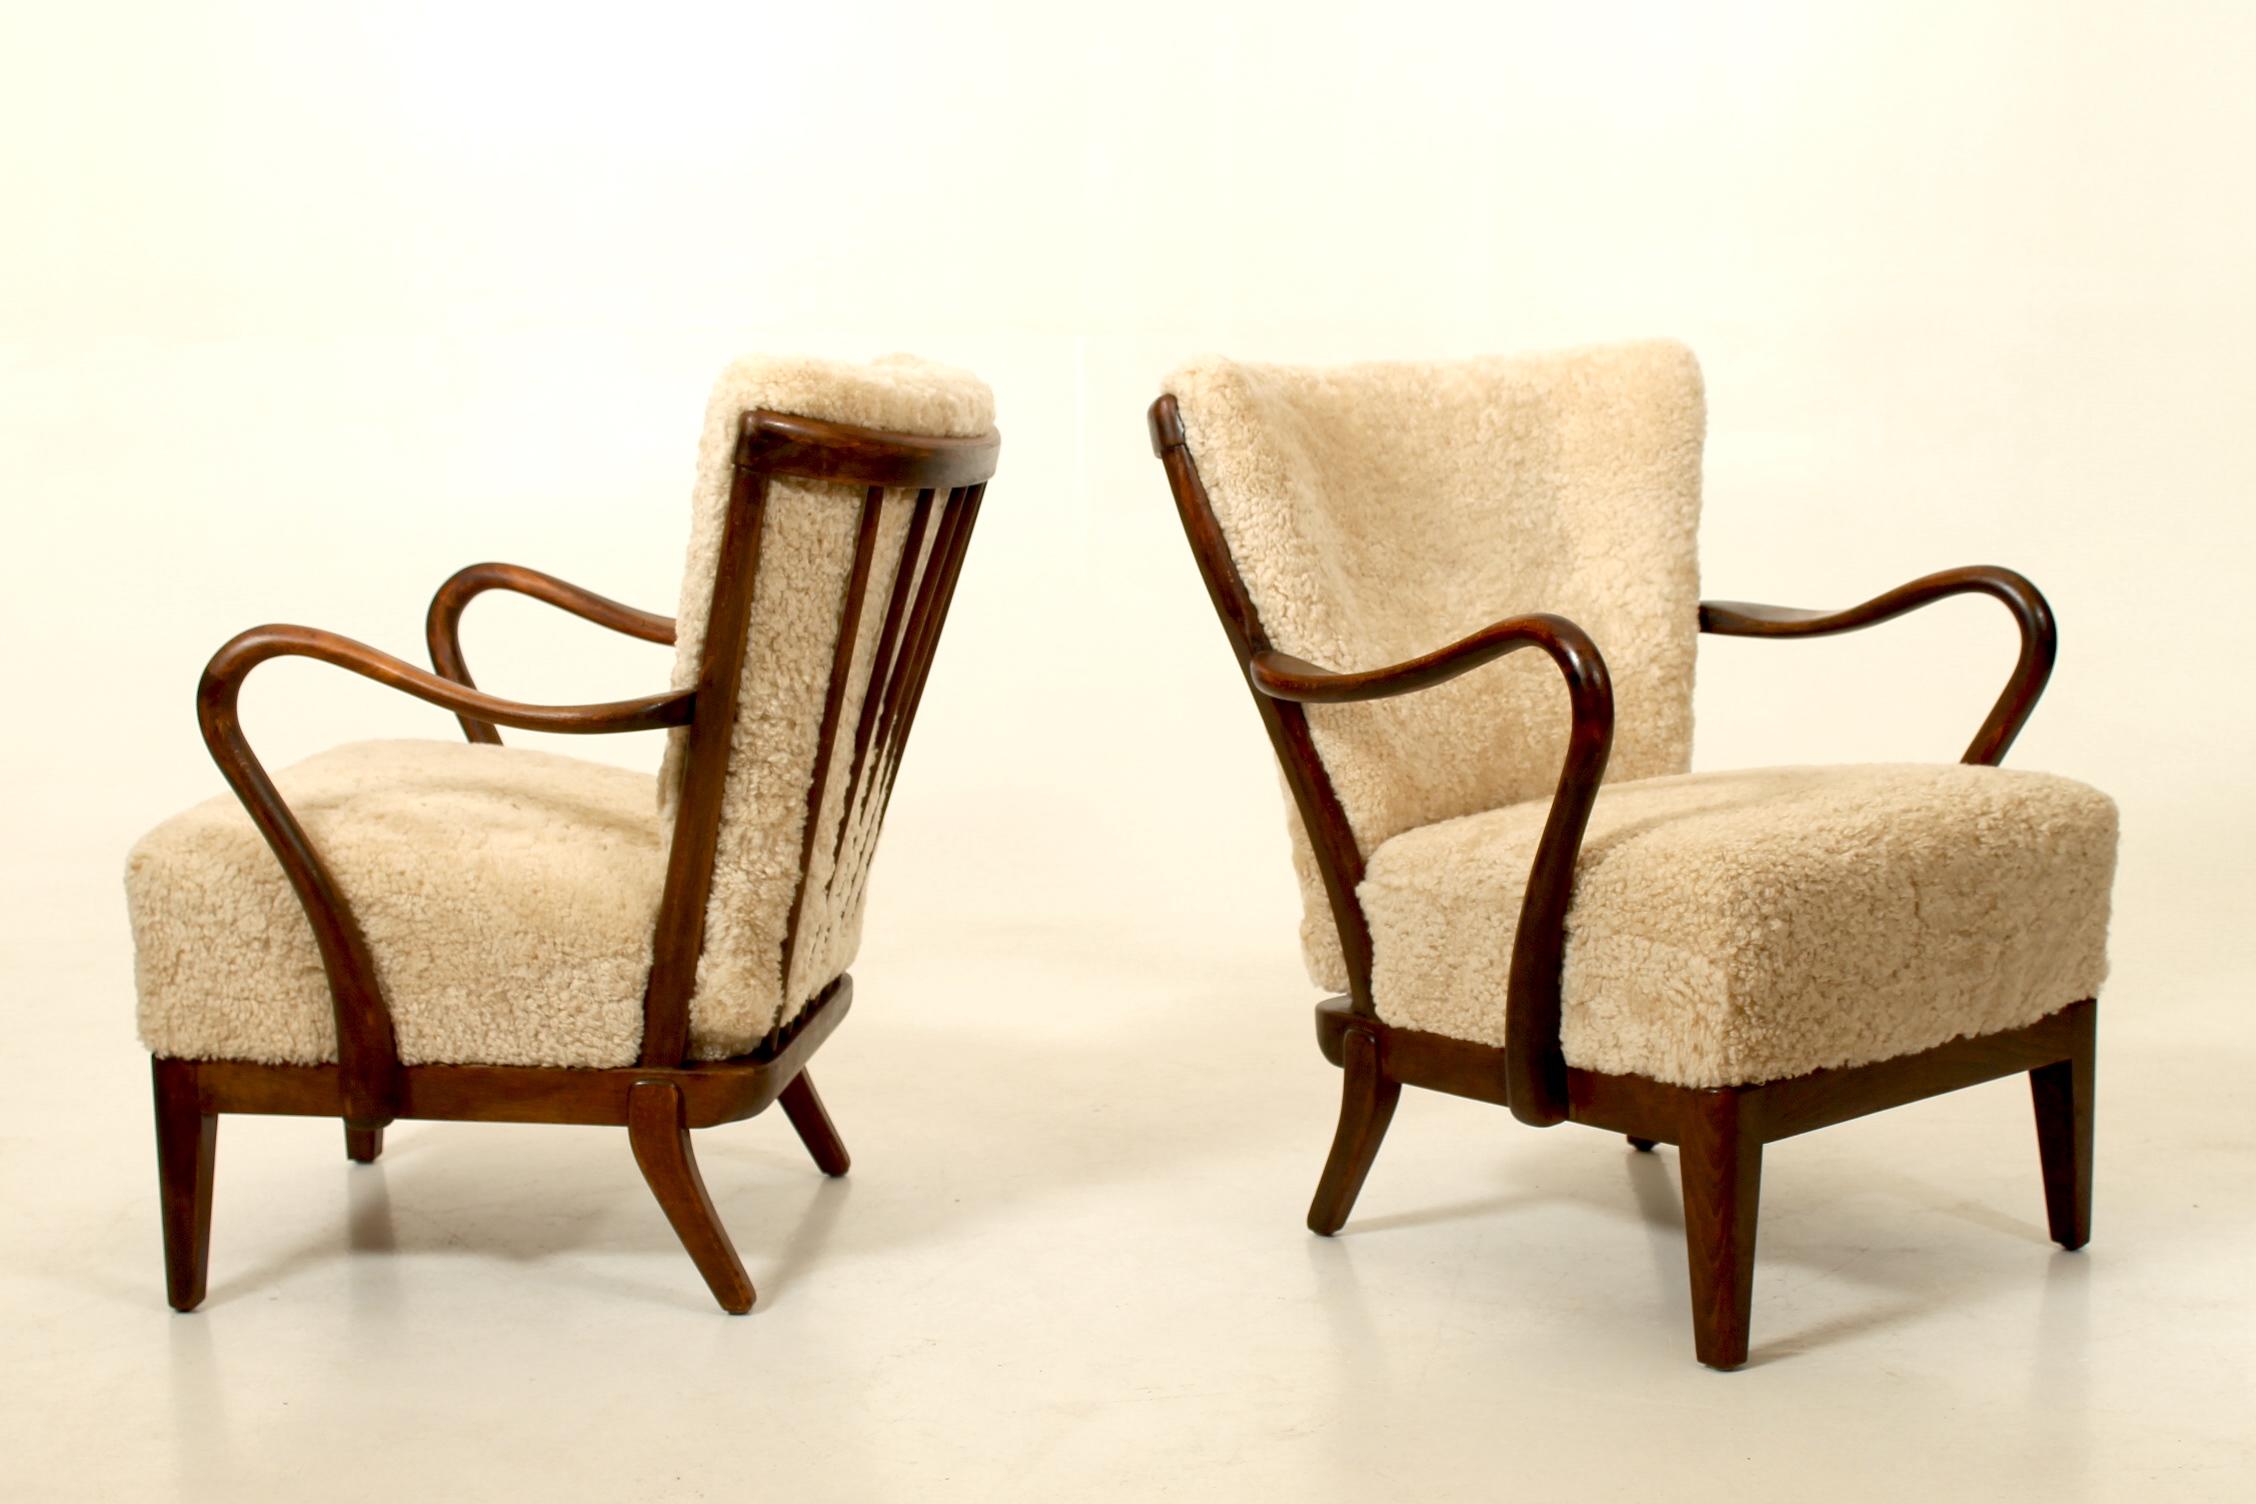 Scandinavian Modern Pair of 1940s lounge chairs by Alfred Christensen, Denmark.